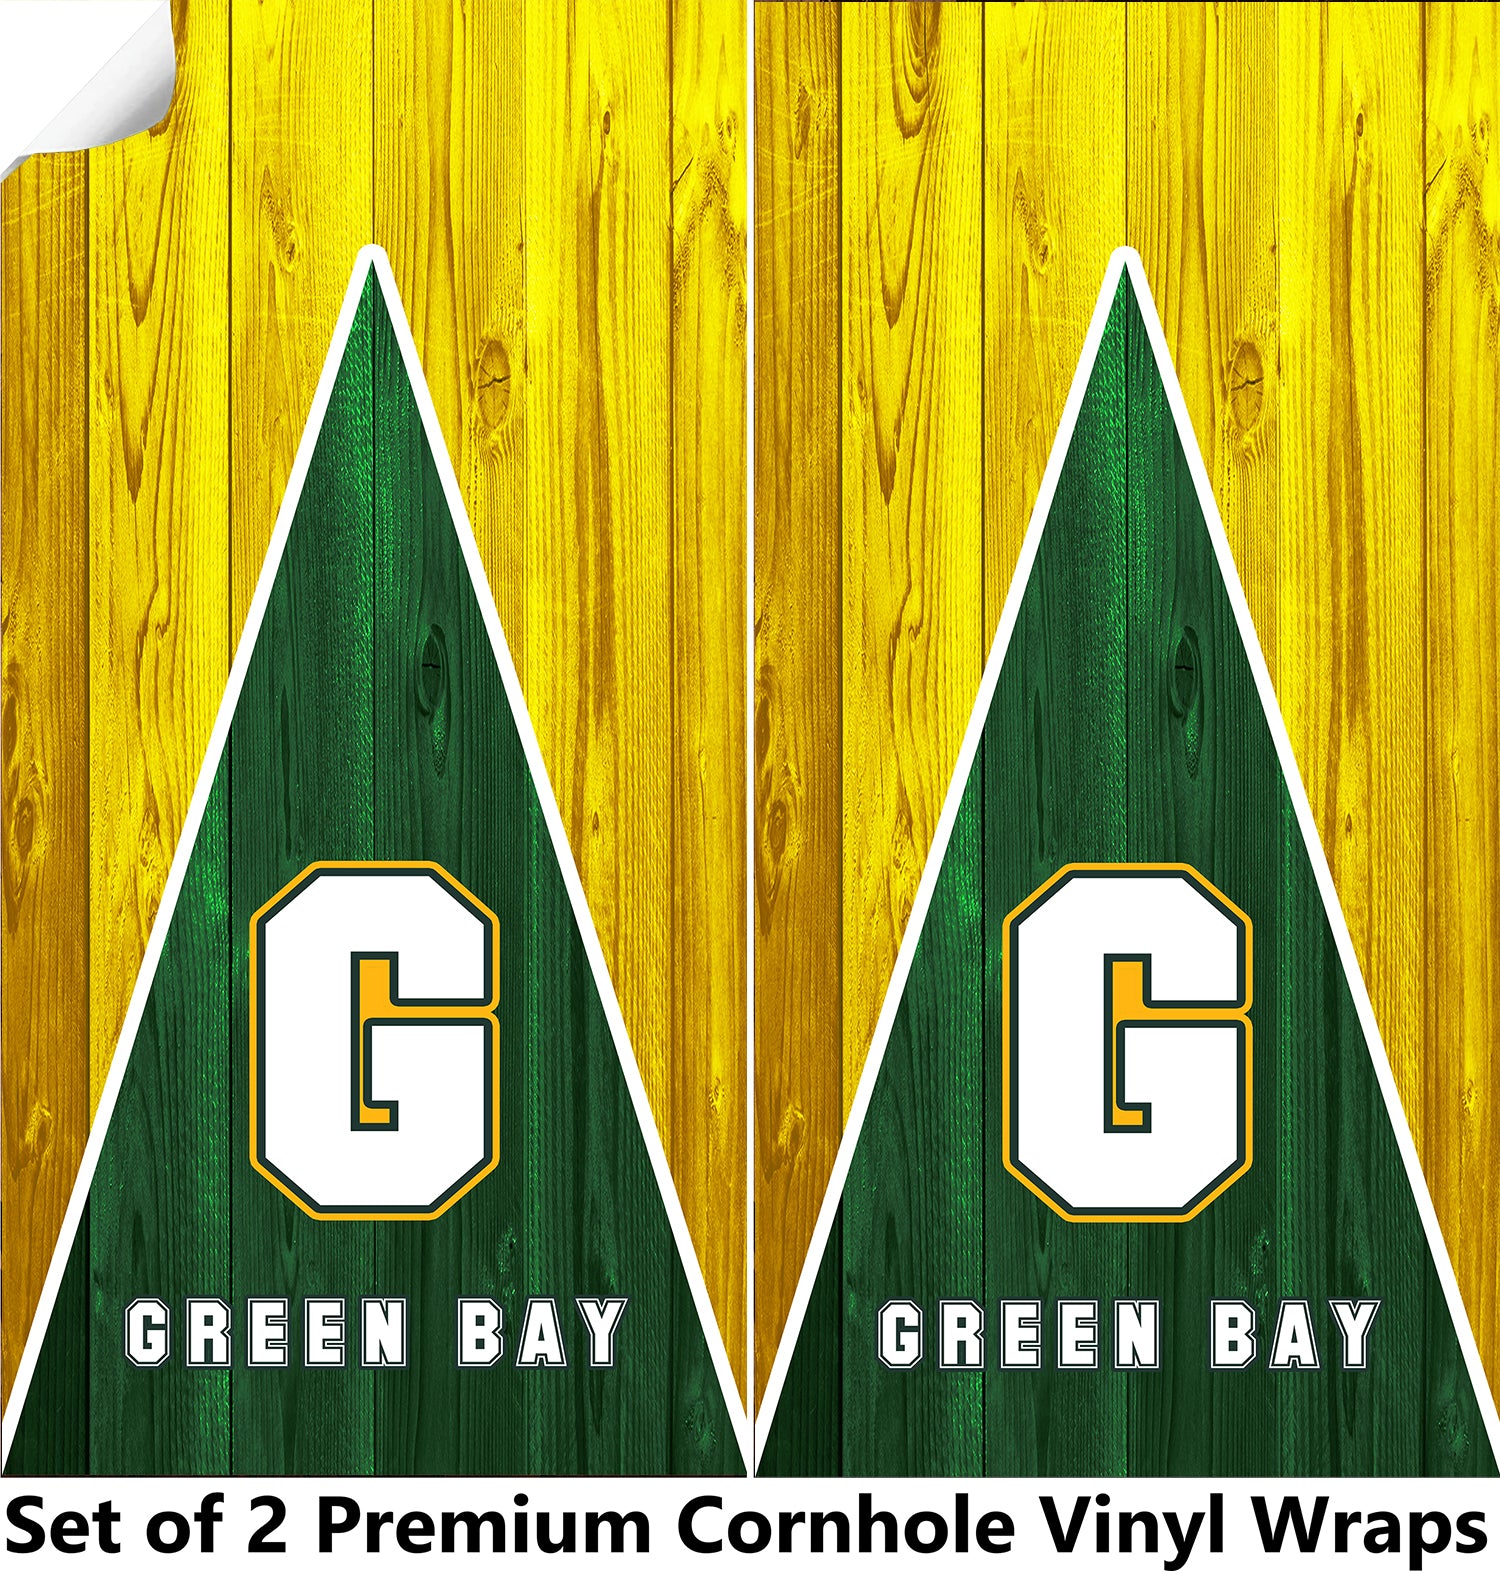 Green Bay Football Cornhole Boards Wraps (Set of 2)